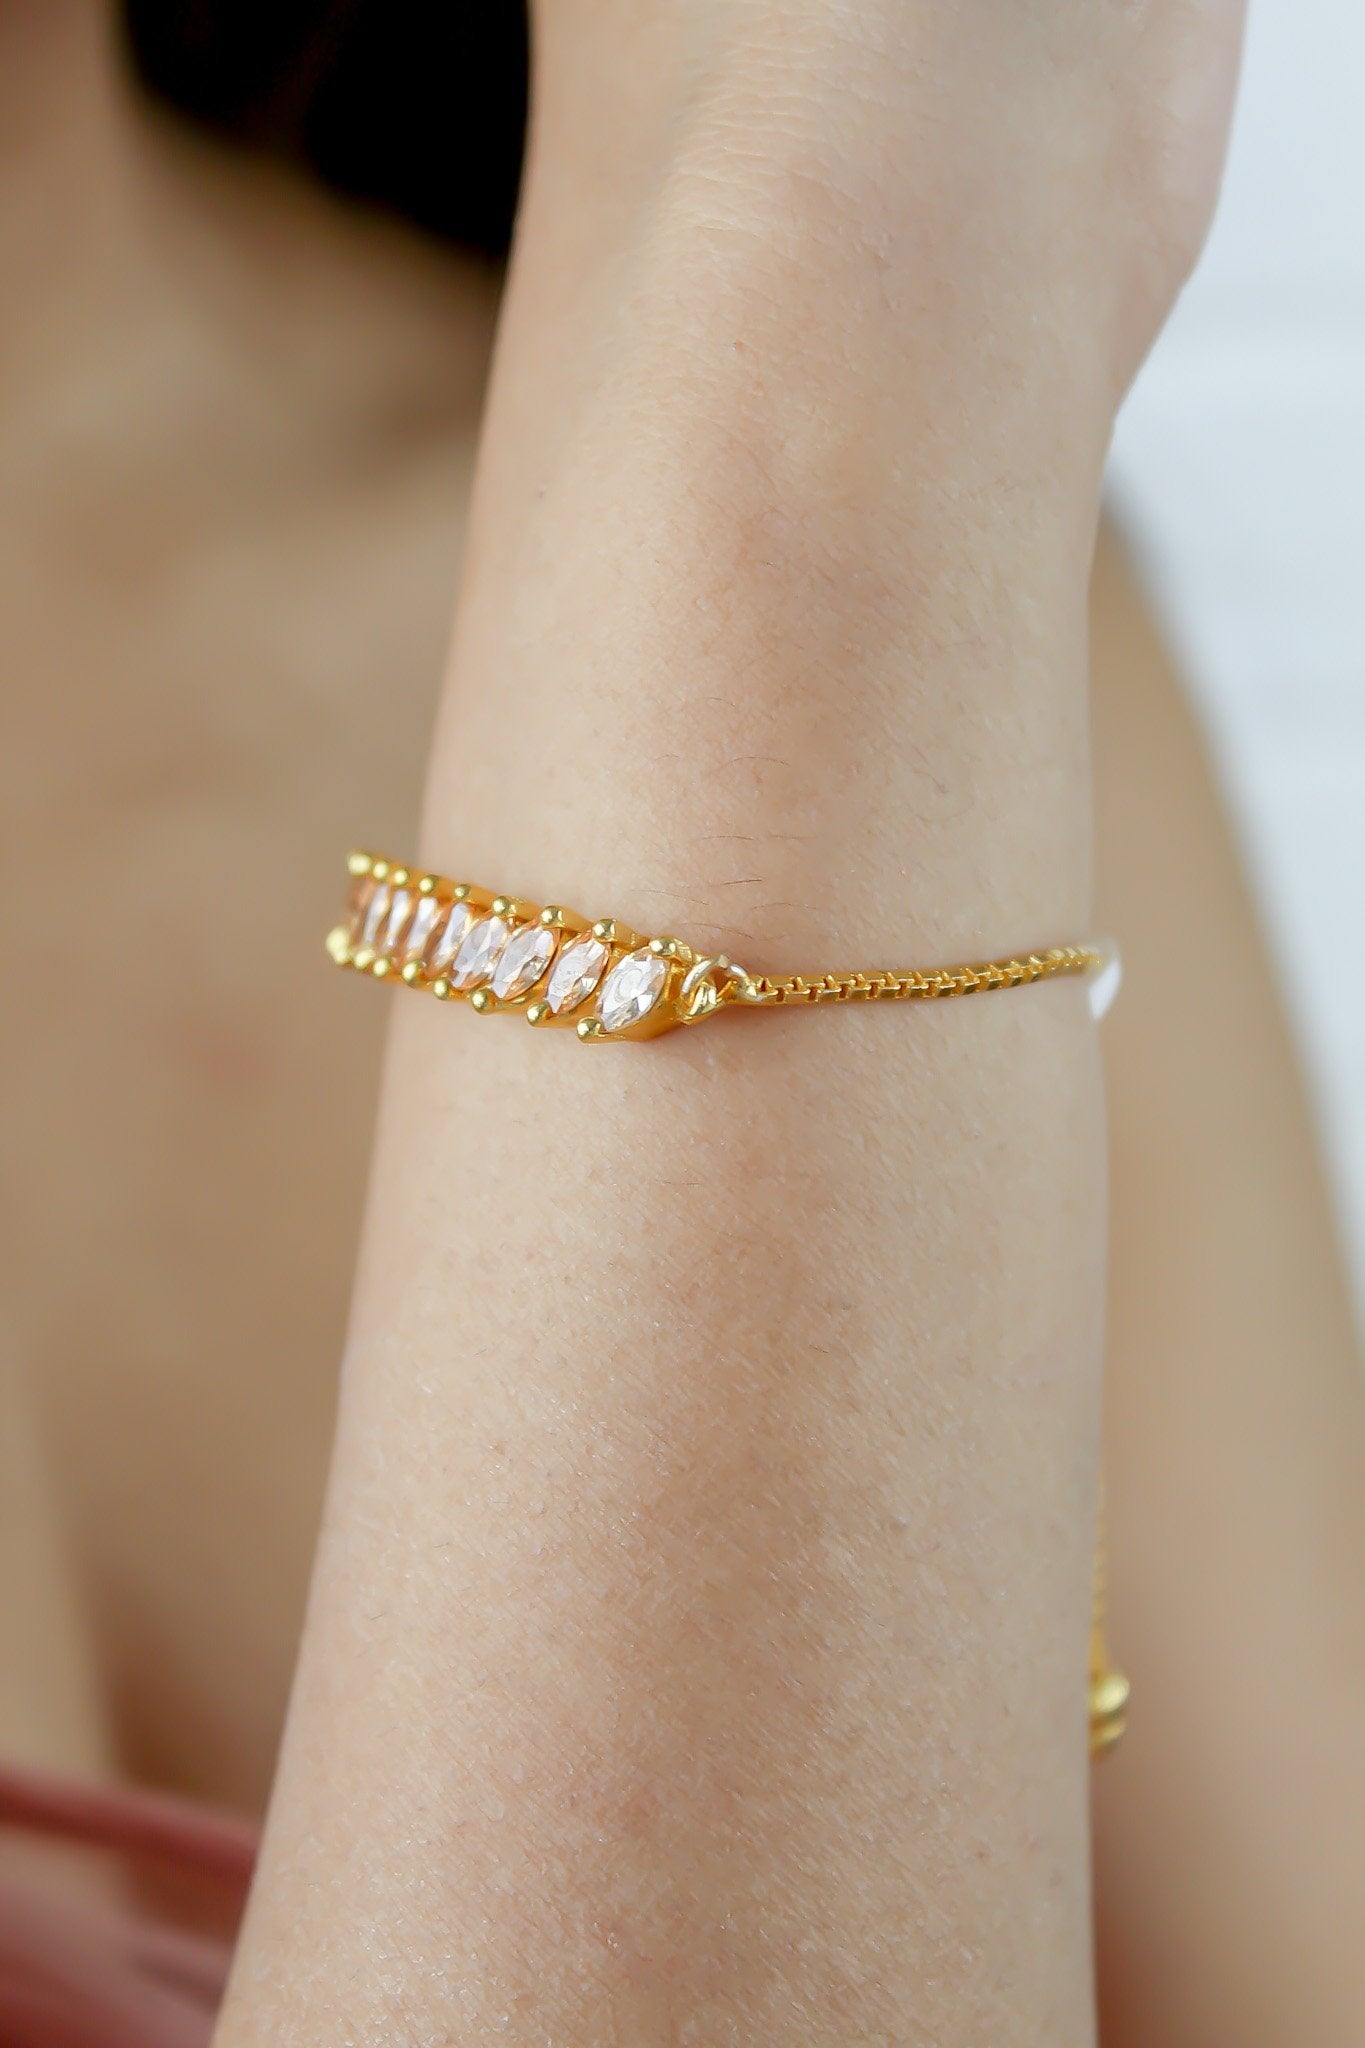 Crystal Spikes Bracelet - 18k Gold Plated with Zirconia Stones, Unique Design, Adjustable Size | Bombay Sunset Bijou Her